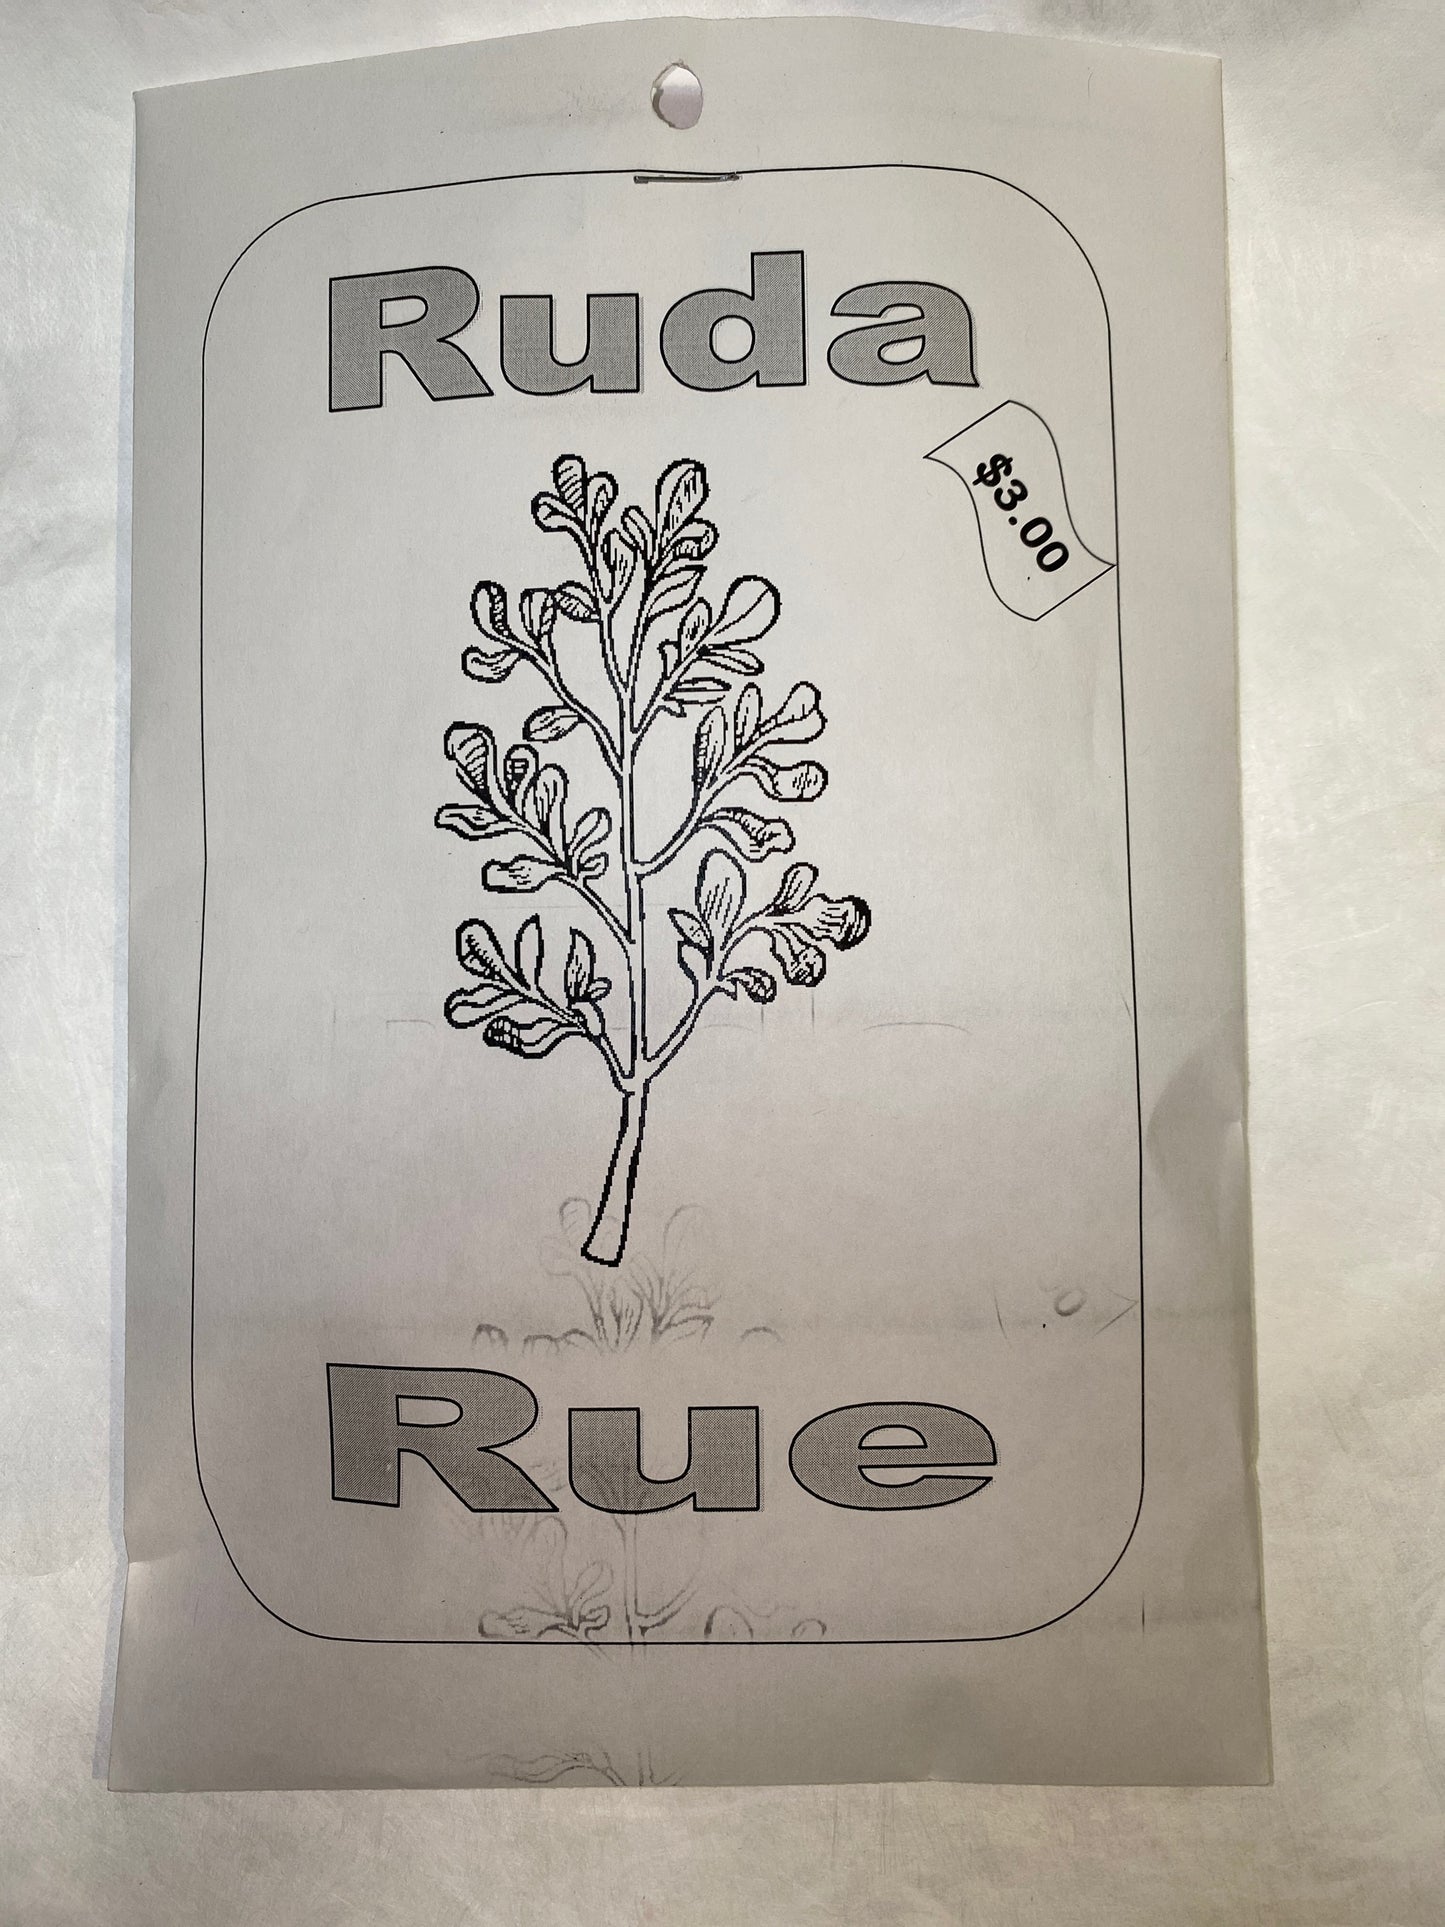 Rue/Ruda Dry Herbs